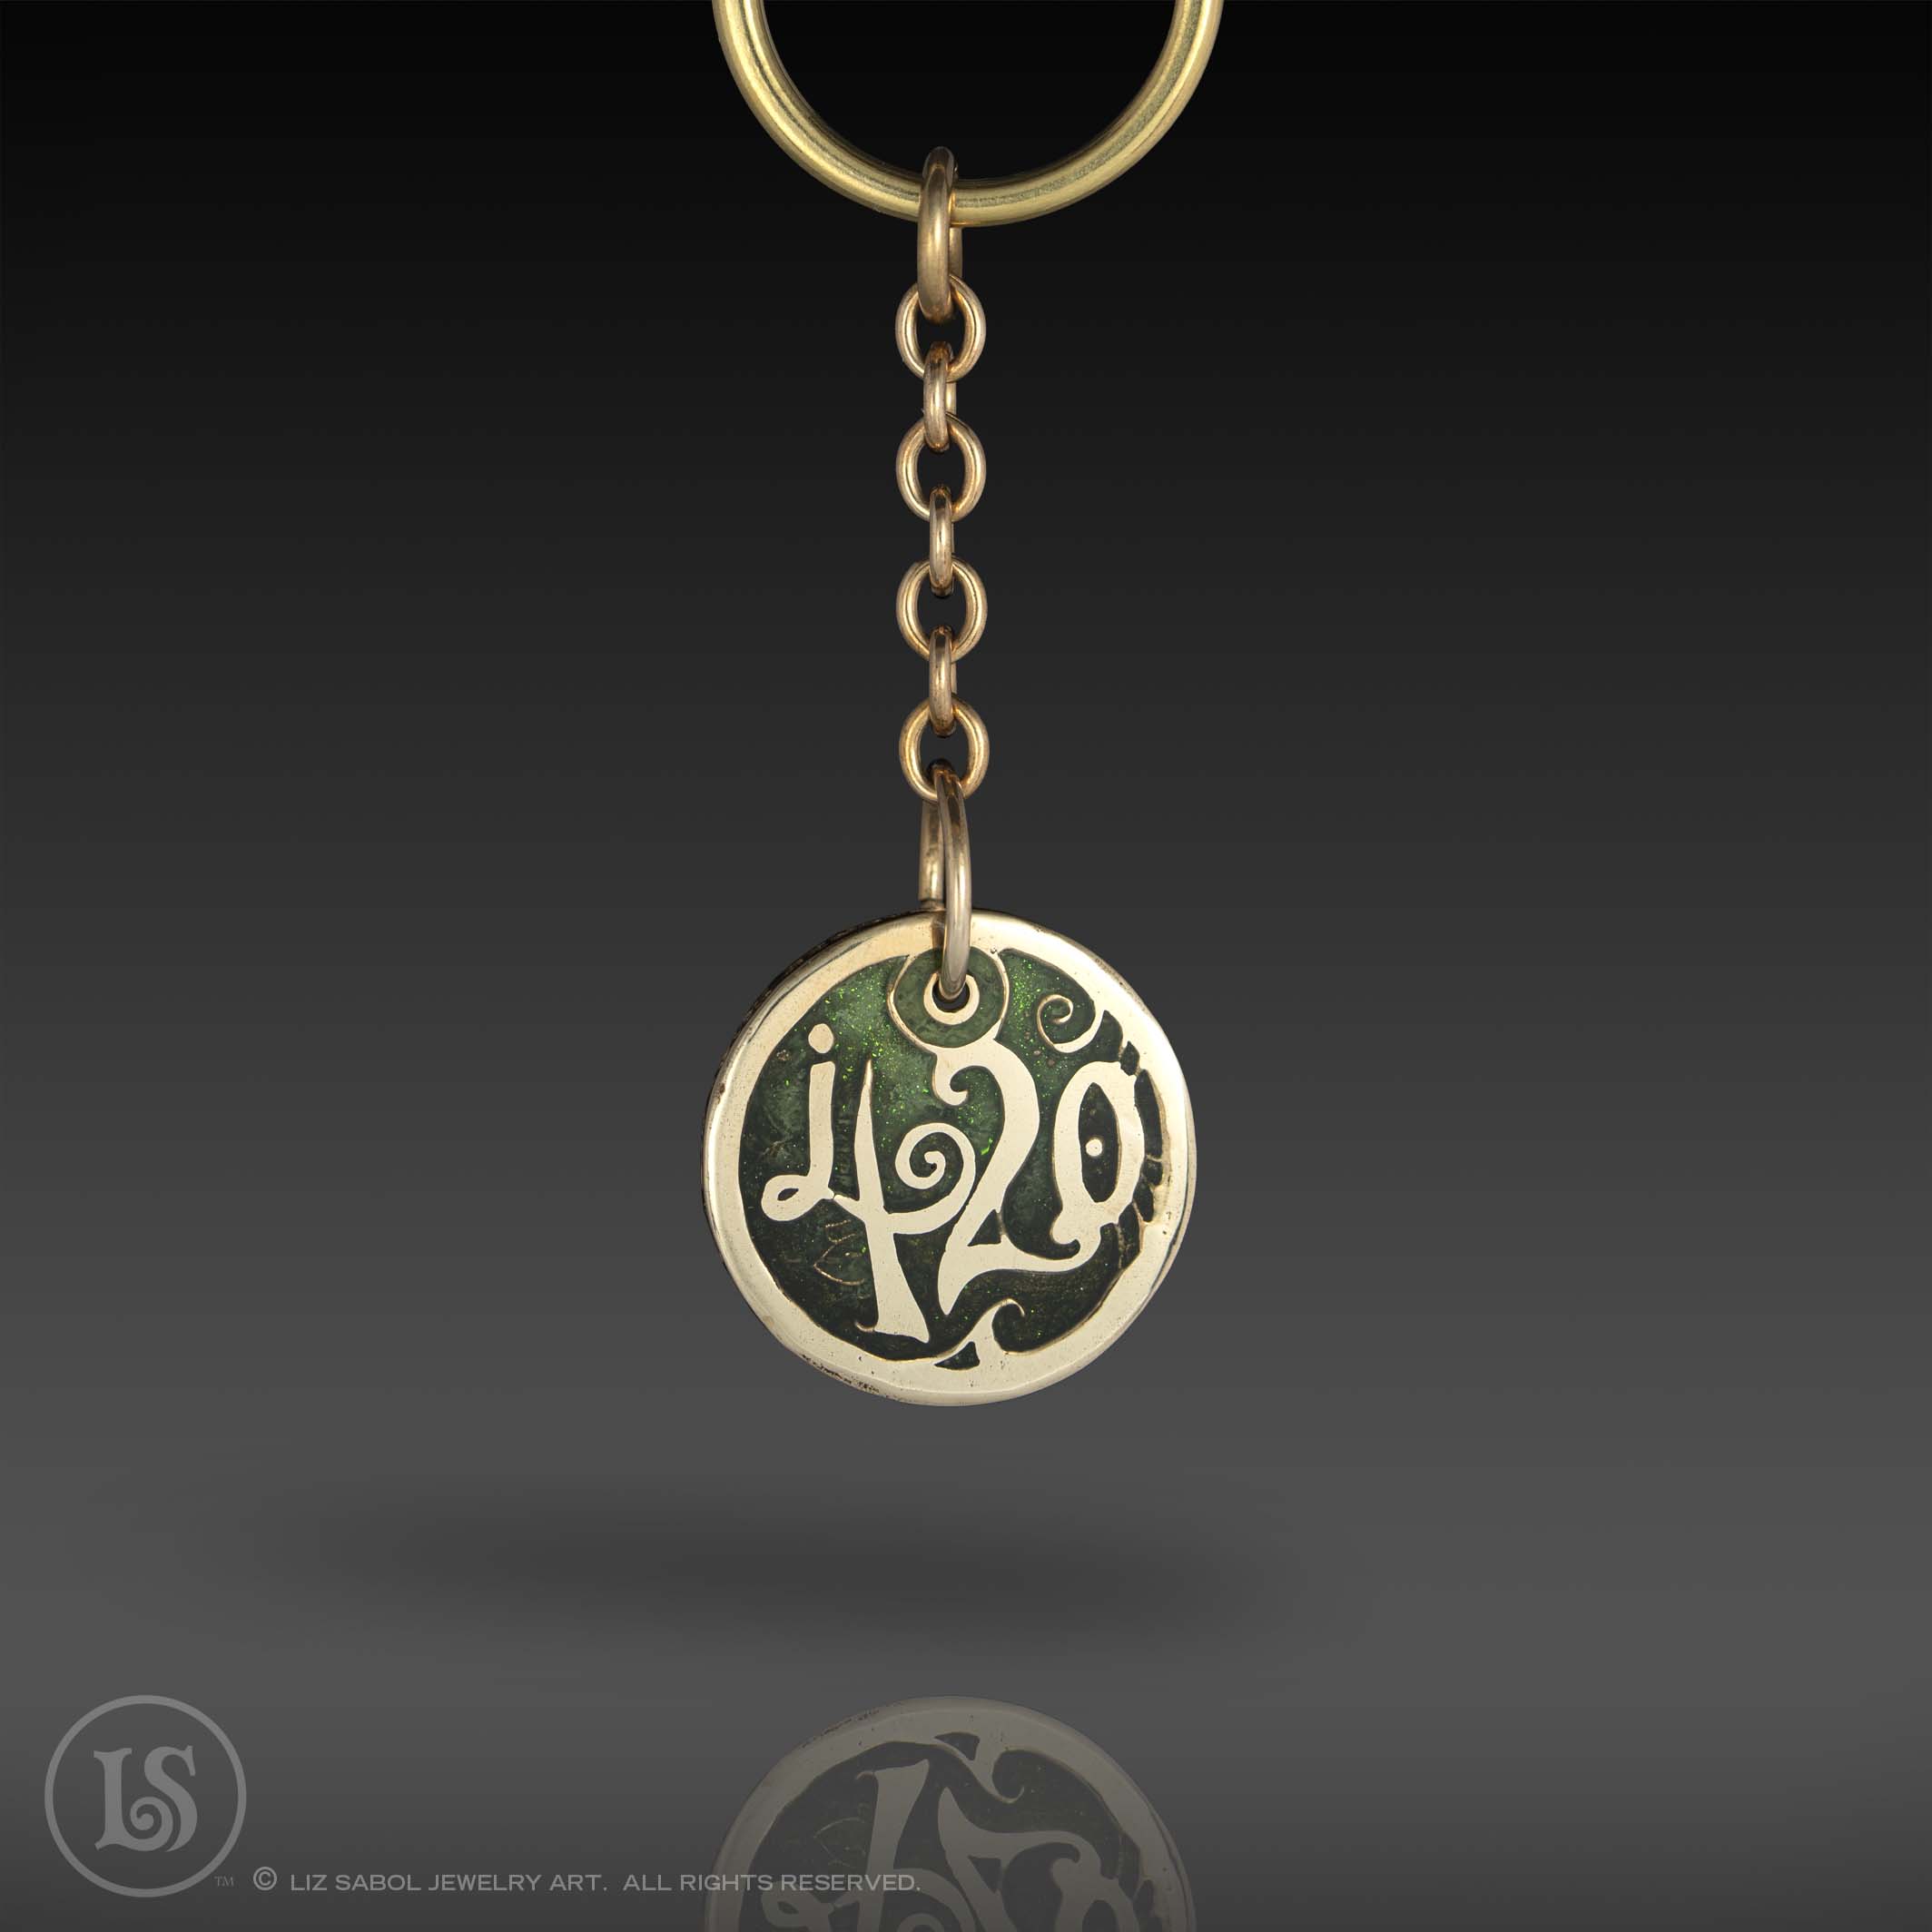 420 pendant Keychain, Bronze